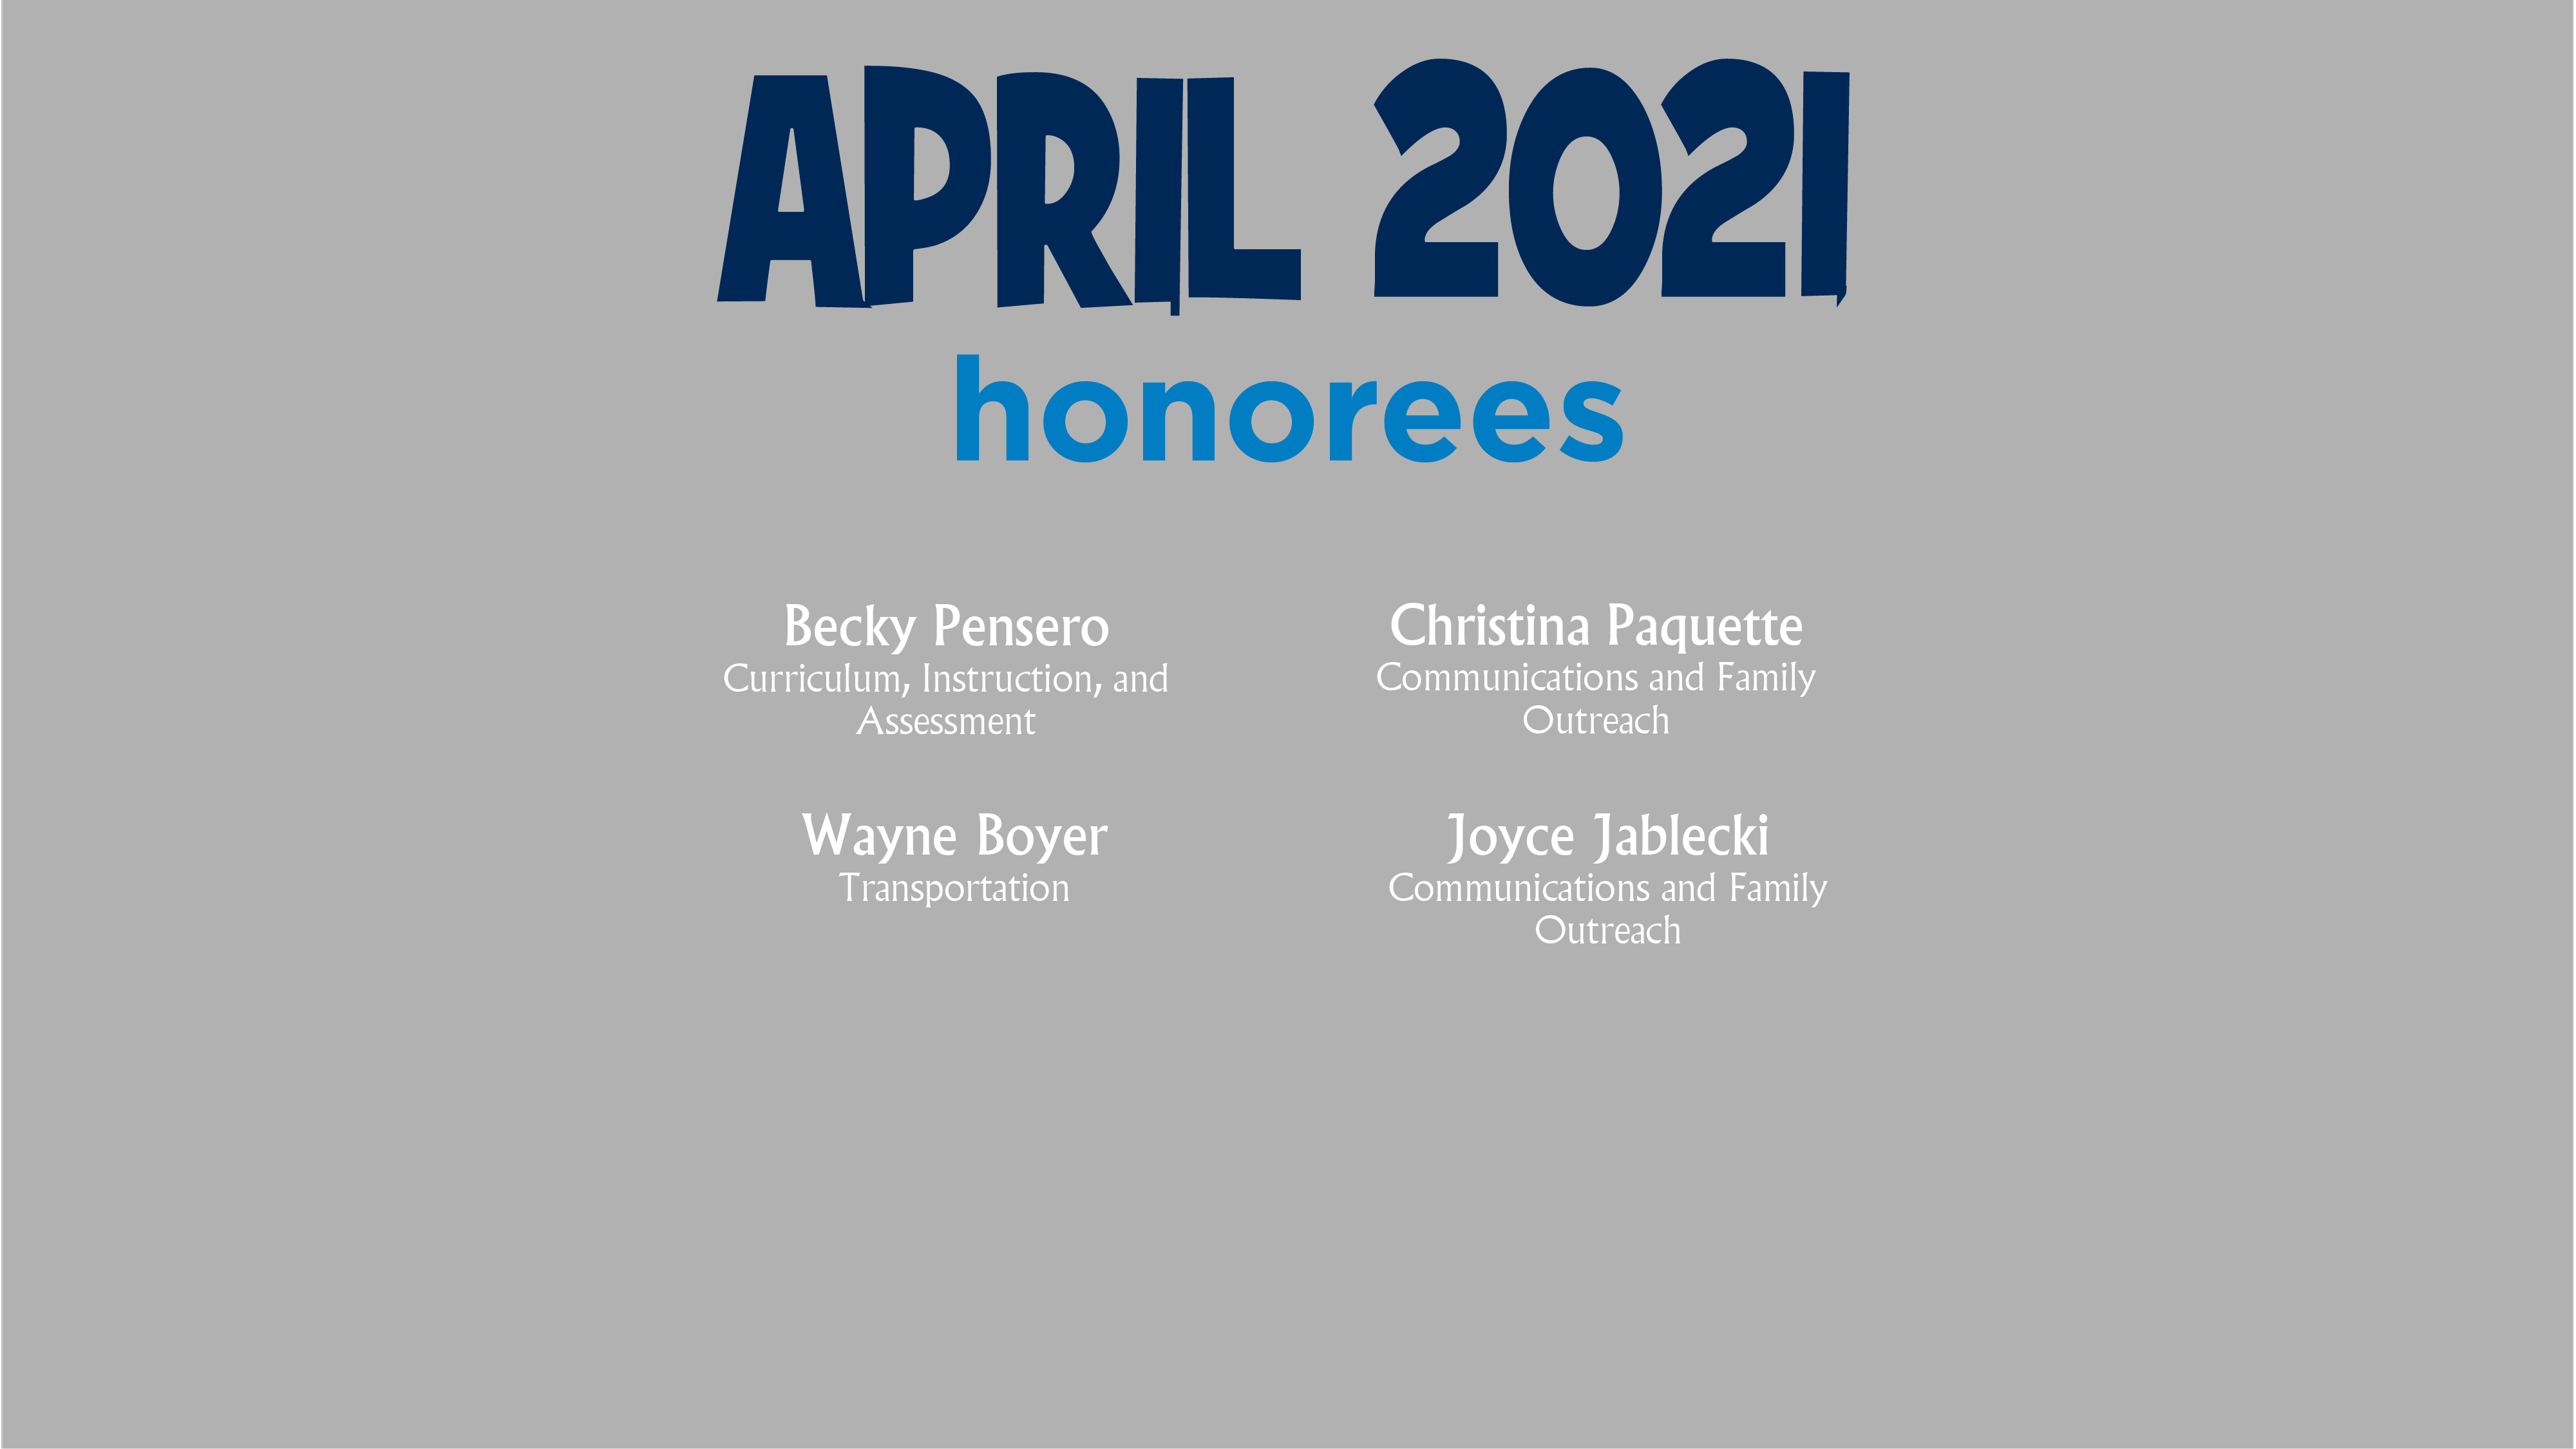 HCPS Bowtie Breakfast Honorees - April 2021